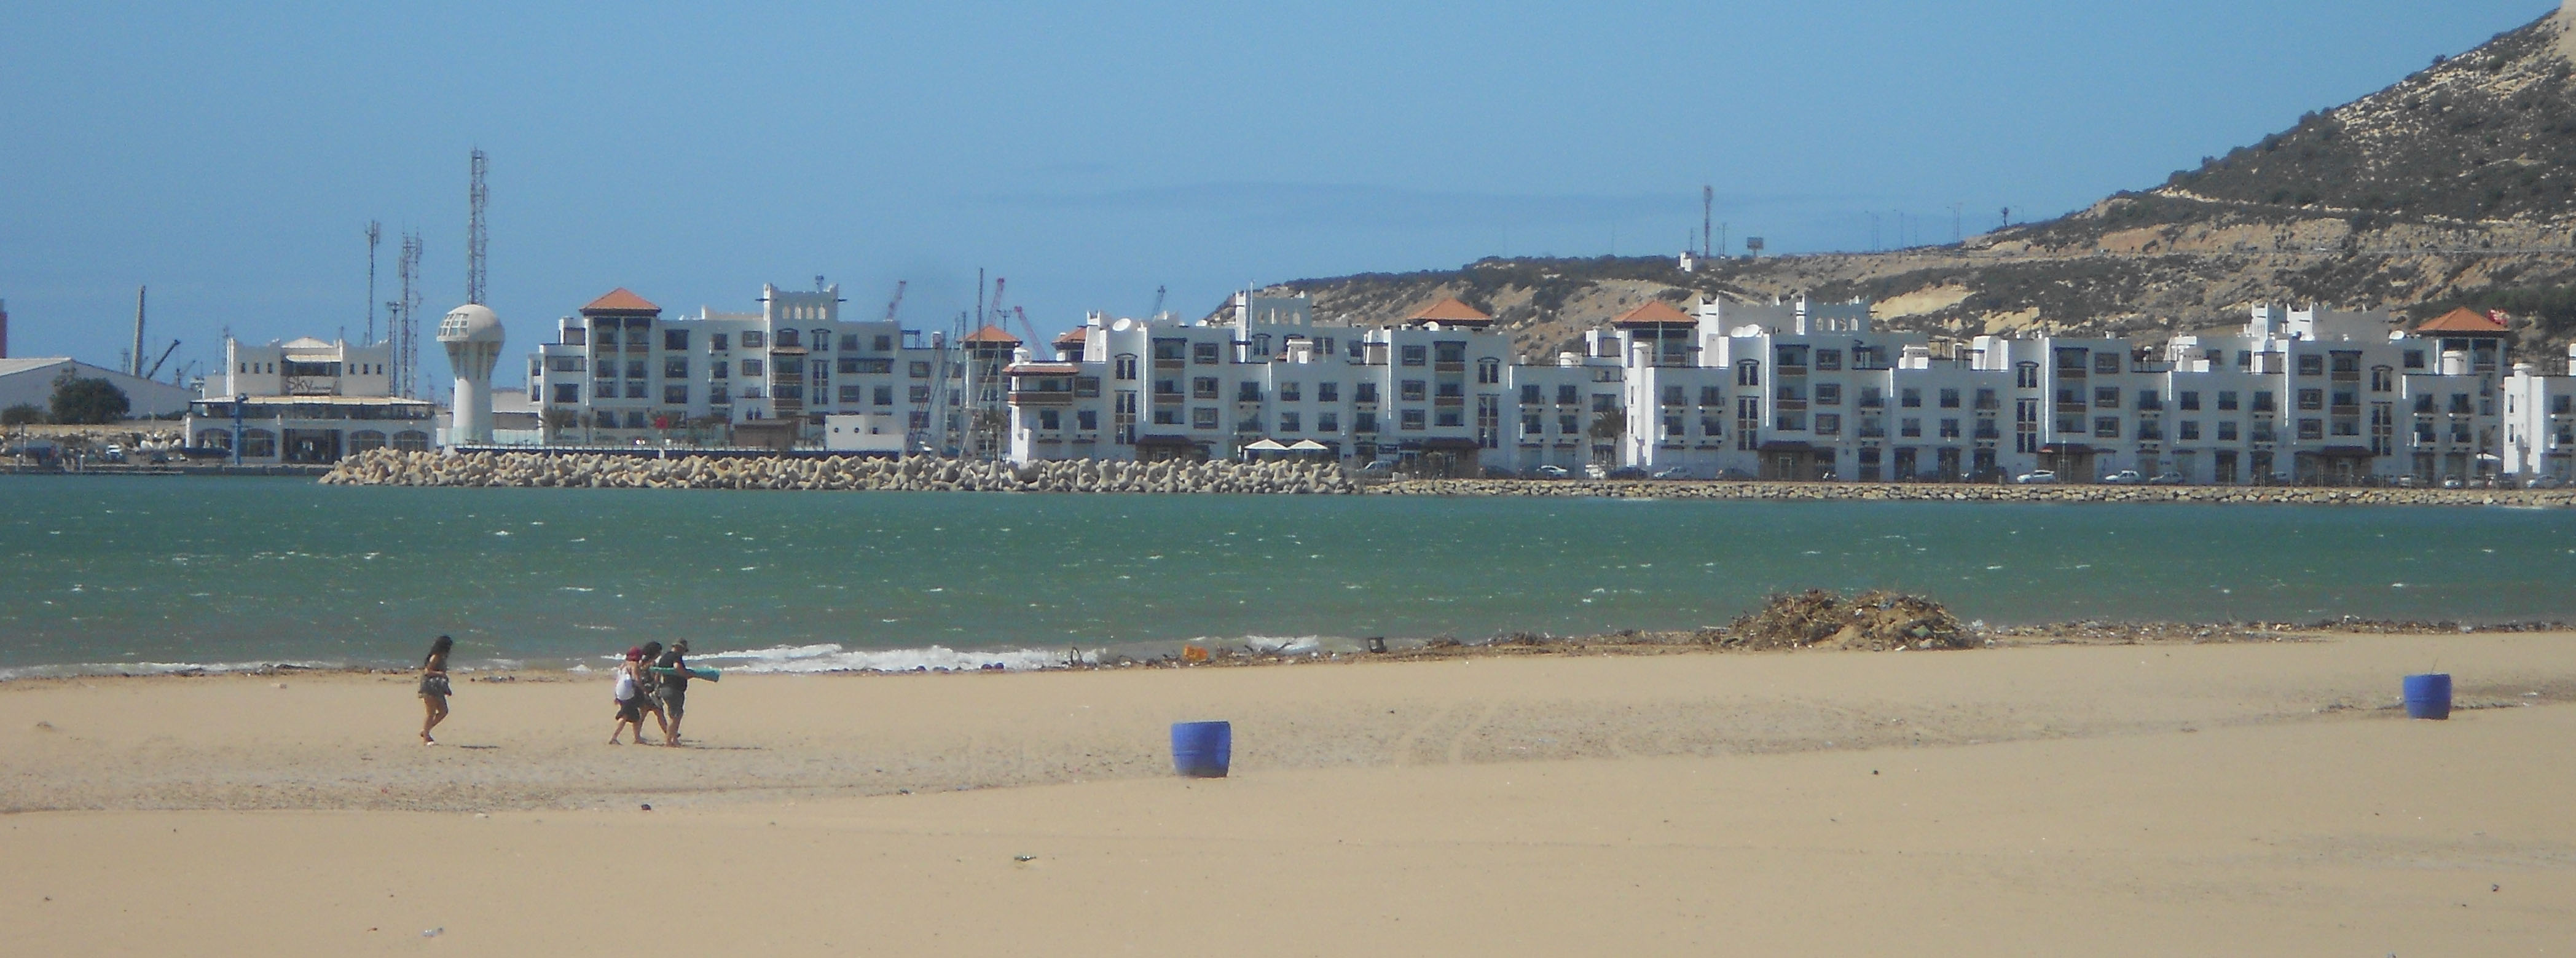 Marina development - Agadir